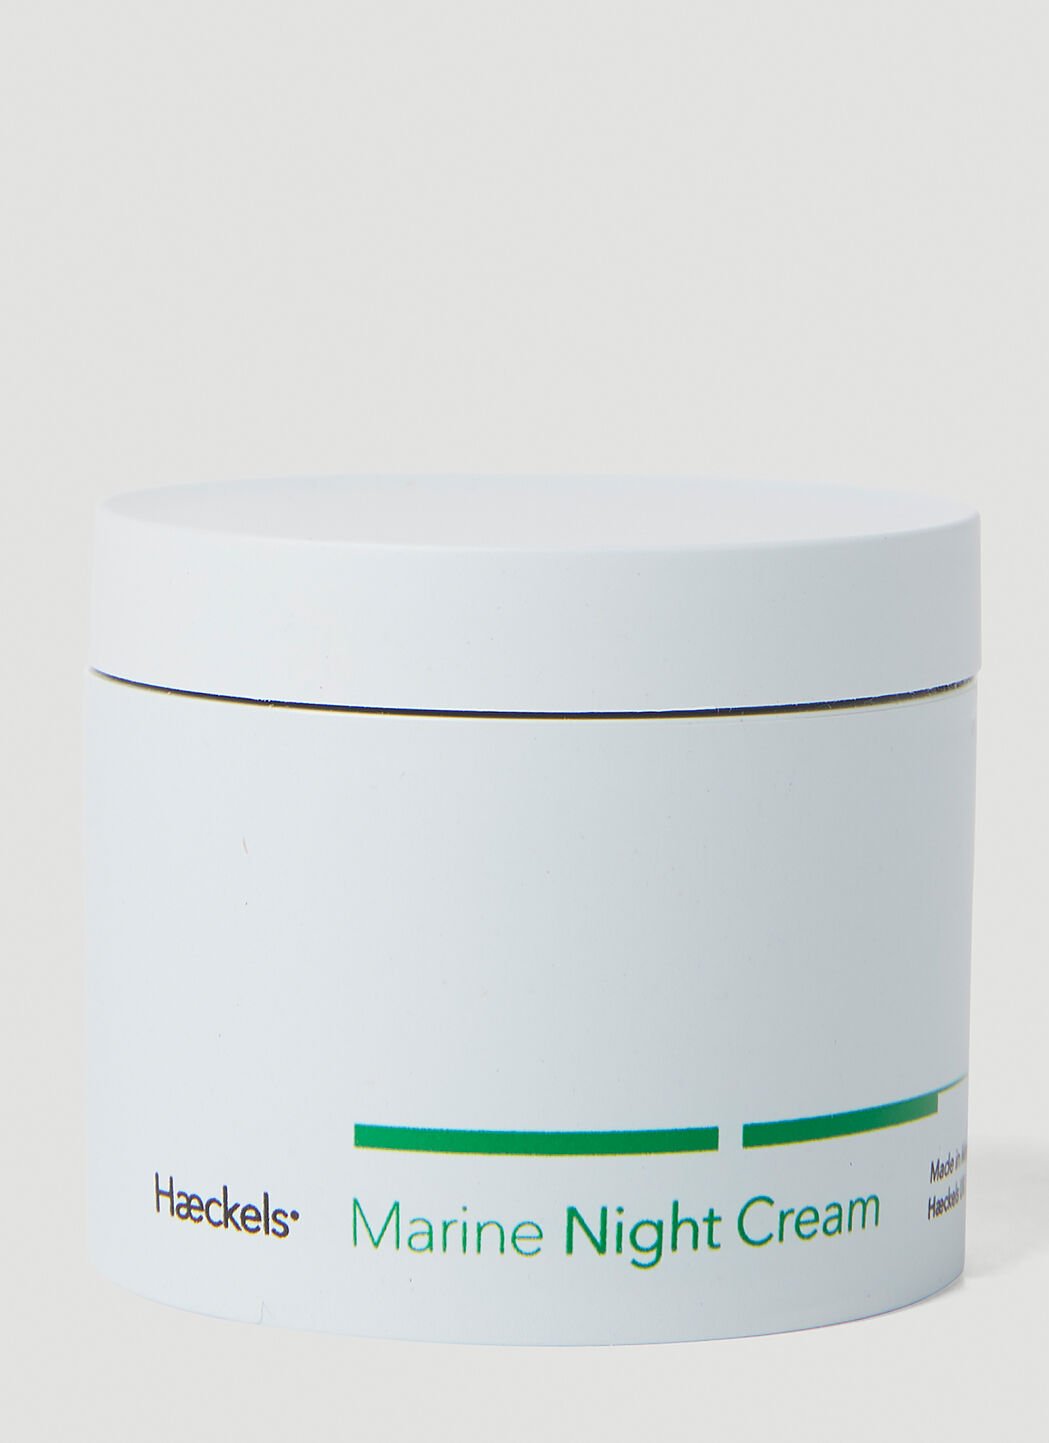 Haeckels Marine Night Cream 晚霜 蓝色 hks0354010